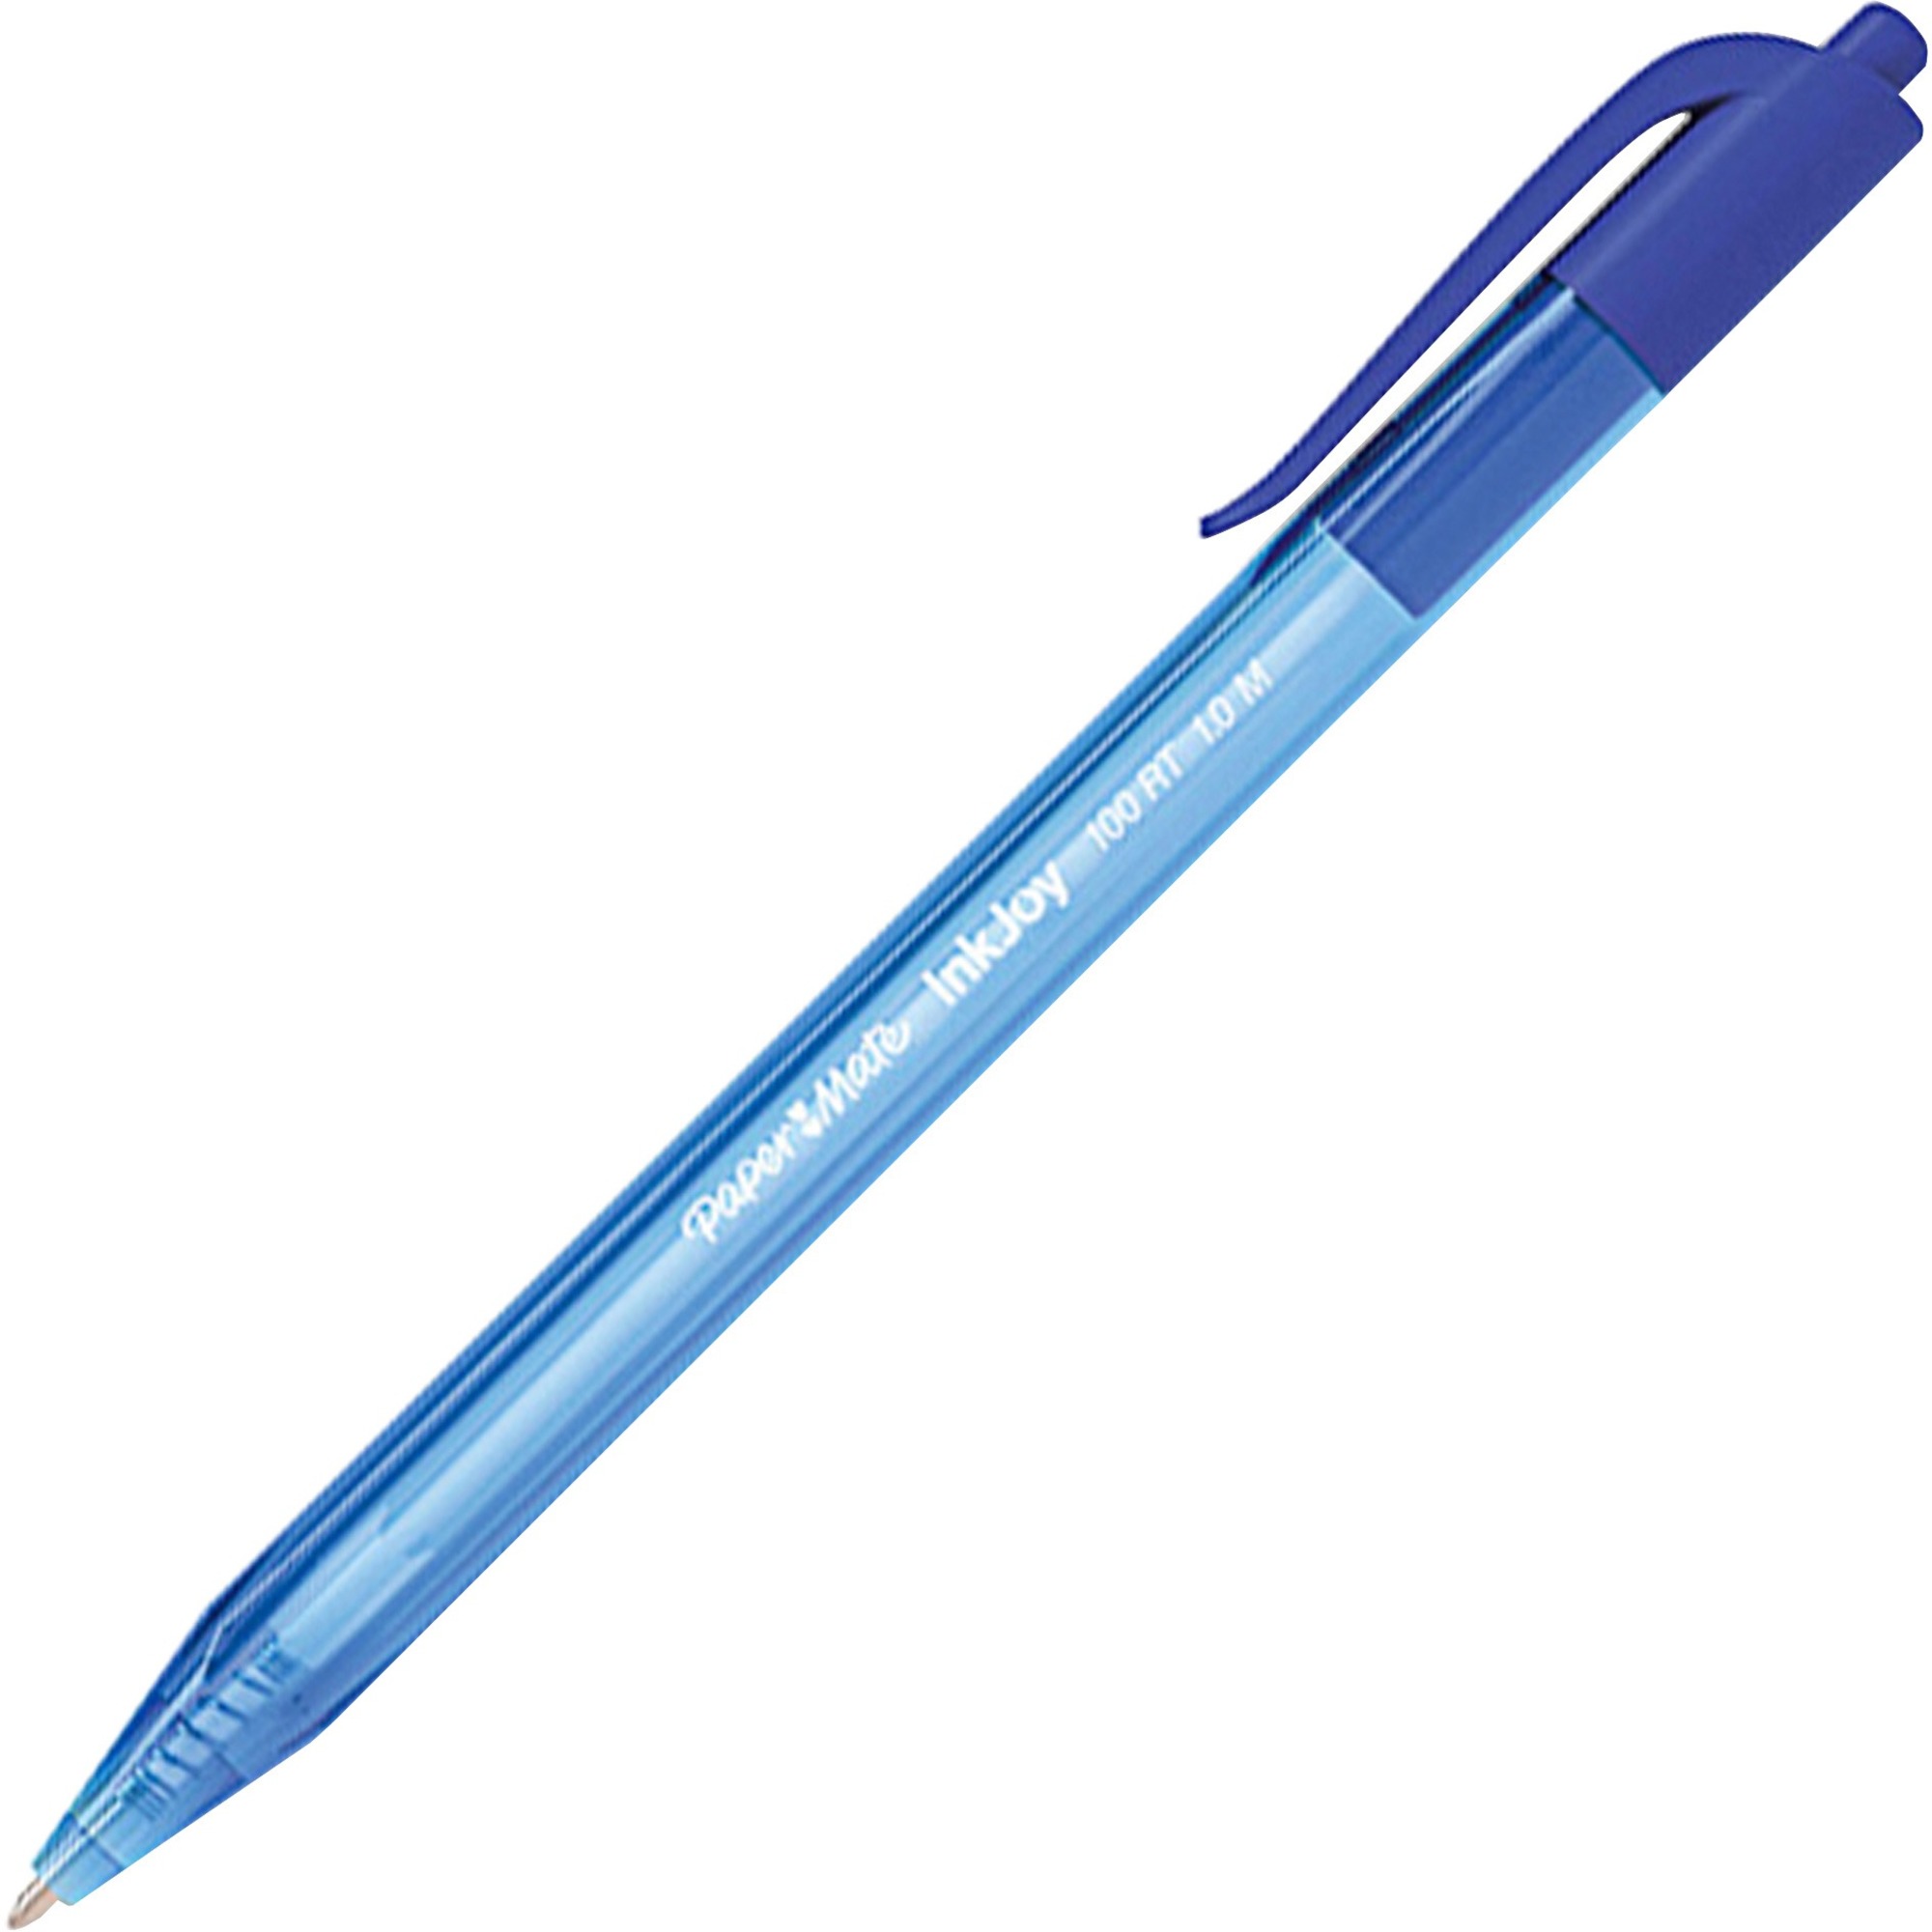 Pm Inkjoy Blk 100 St, Pens, Pencils & Markers